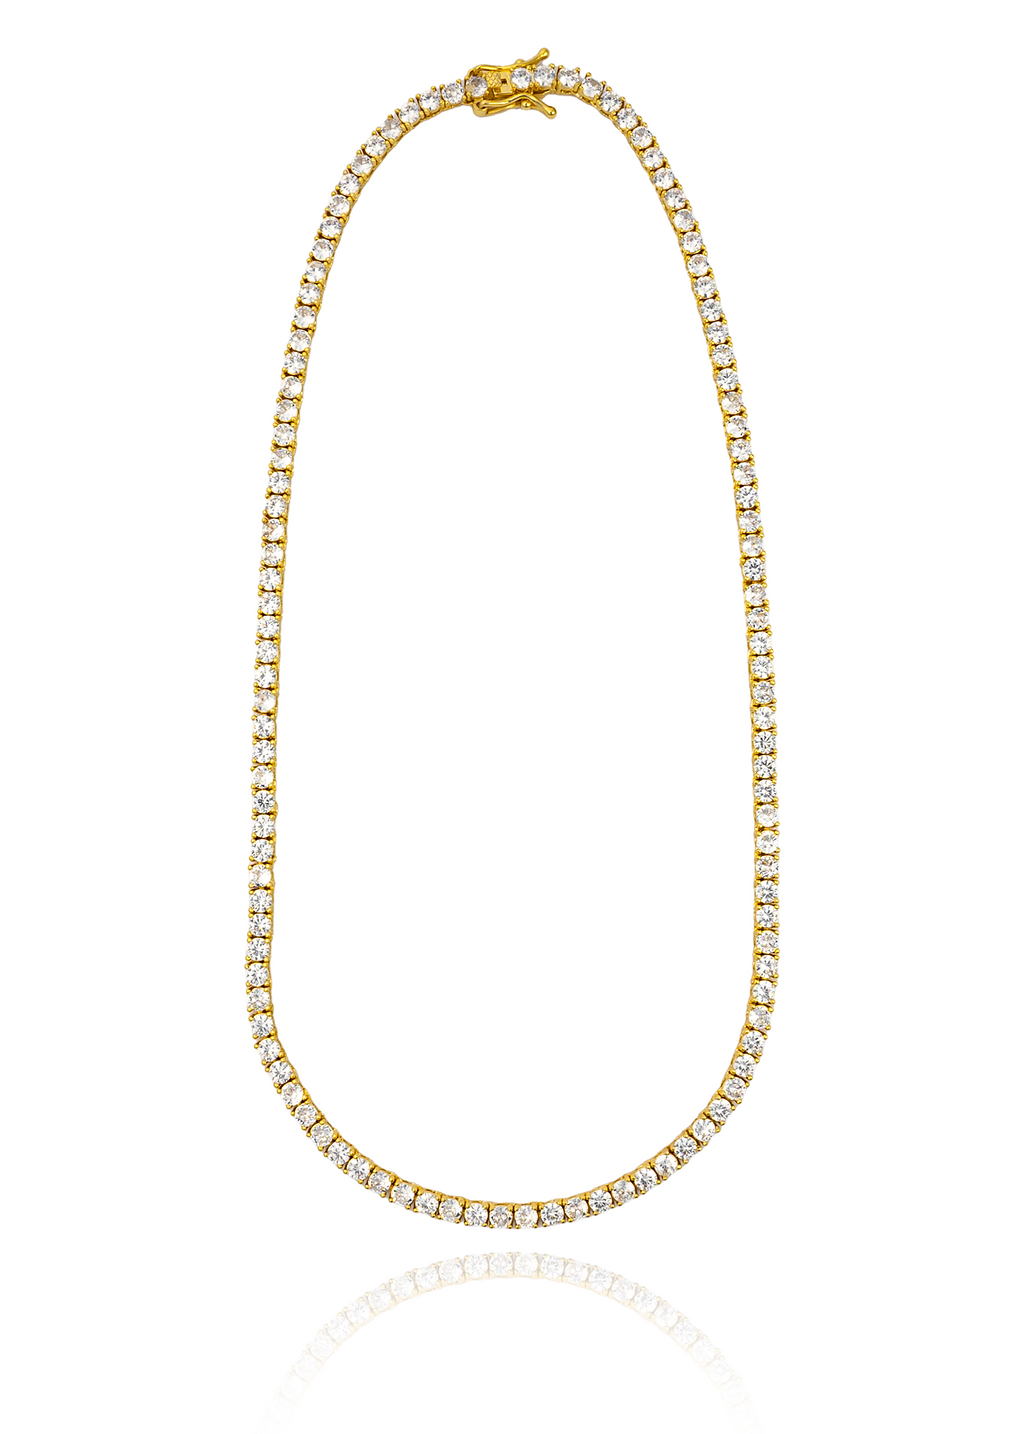 Diamond 4mm Tennis Necklace/Bracelet with Cubic Zirconia Stones (I450)(H101)